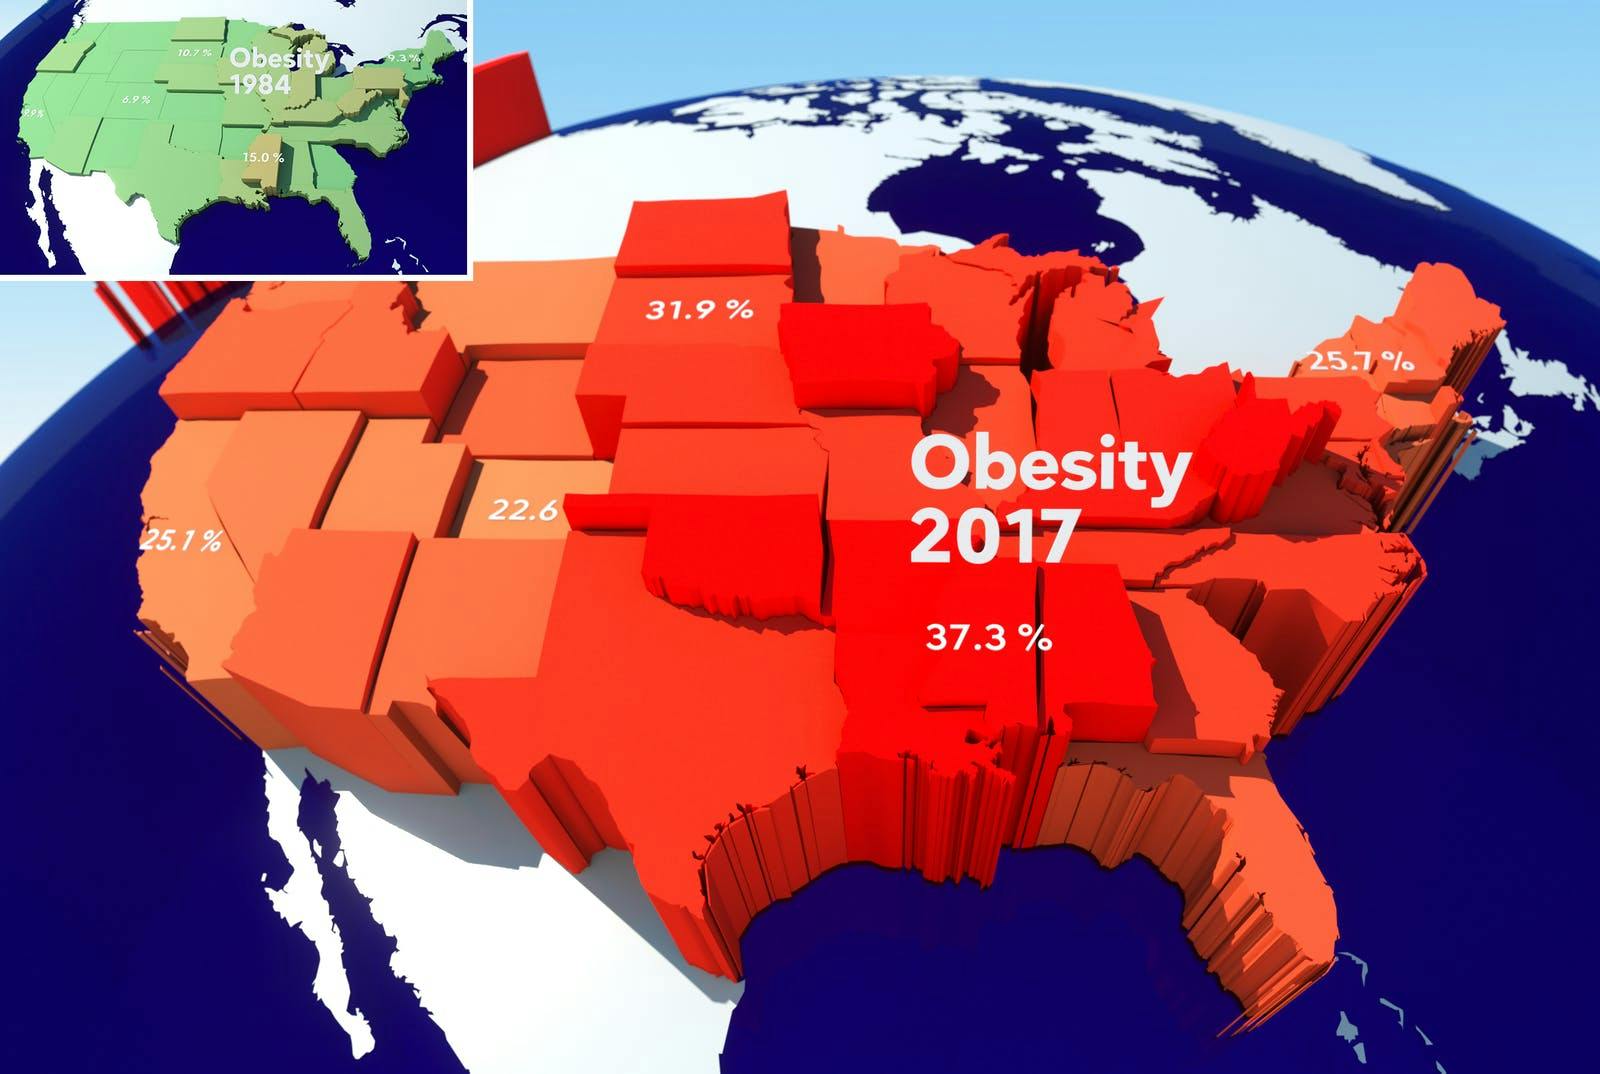 obesity_1984-2017_map (1)